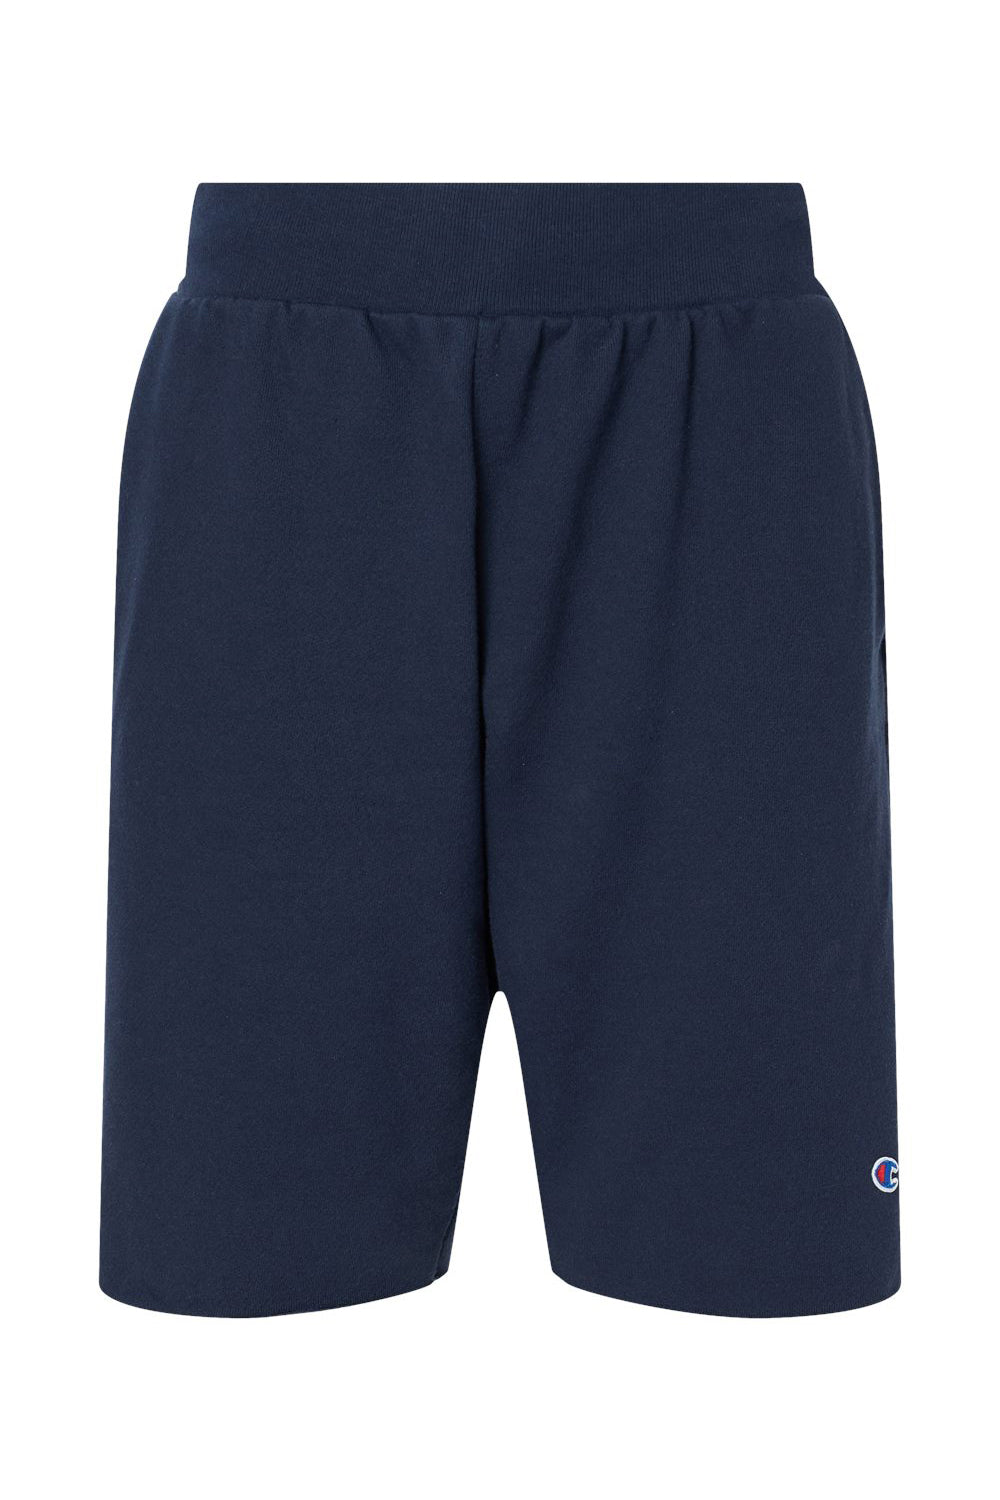 Champion RW26 Mens Reverse Weave Shorts w/ Pockets Navy Blue Flat Front